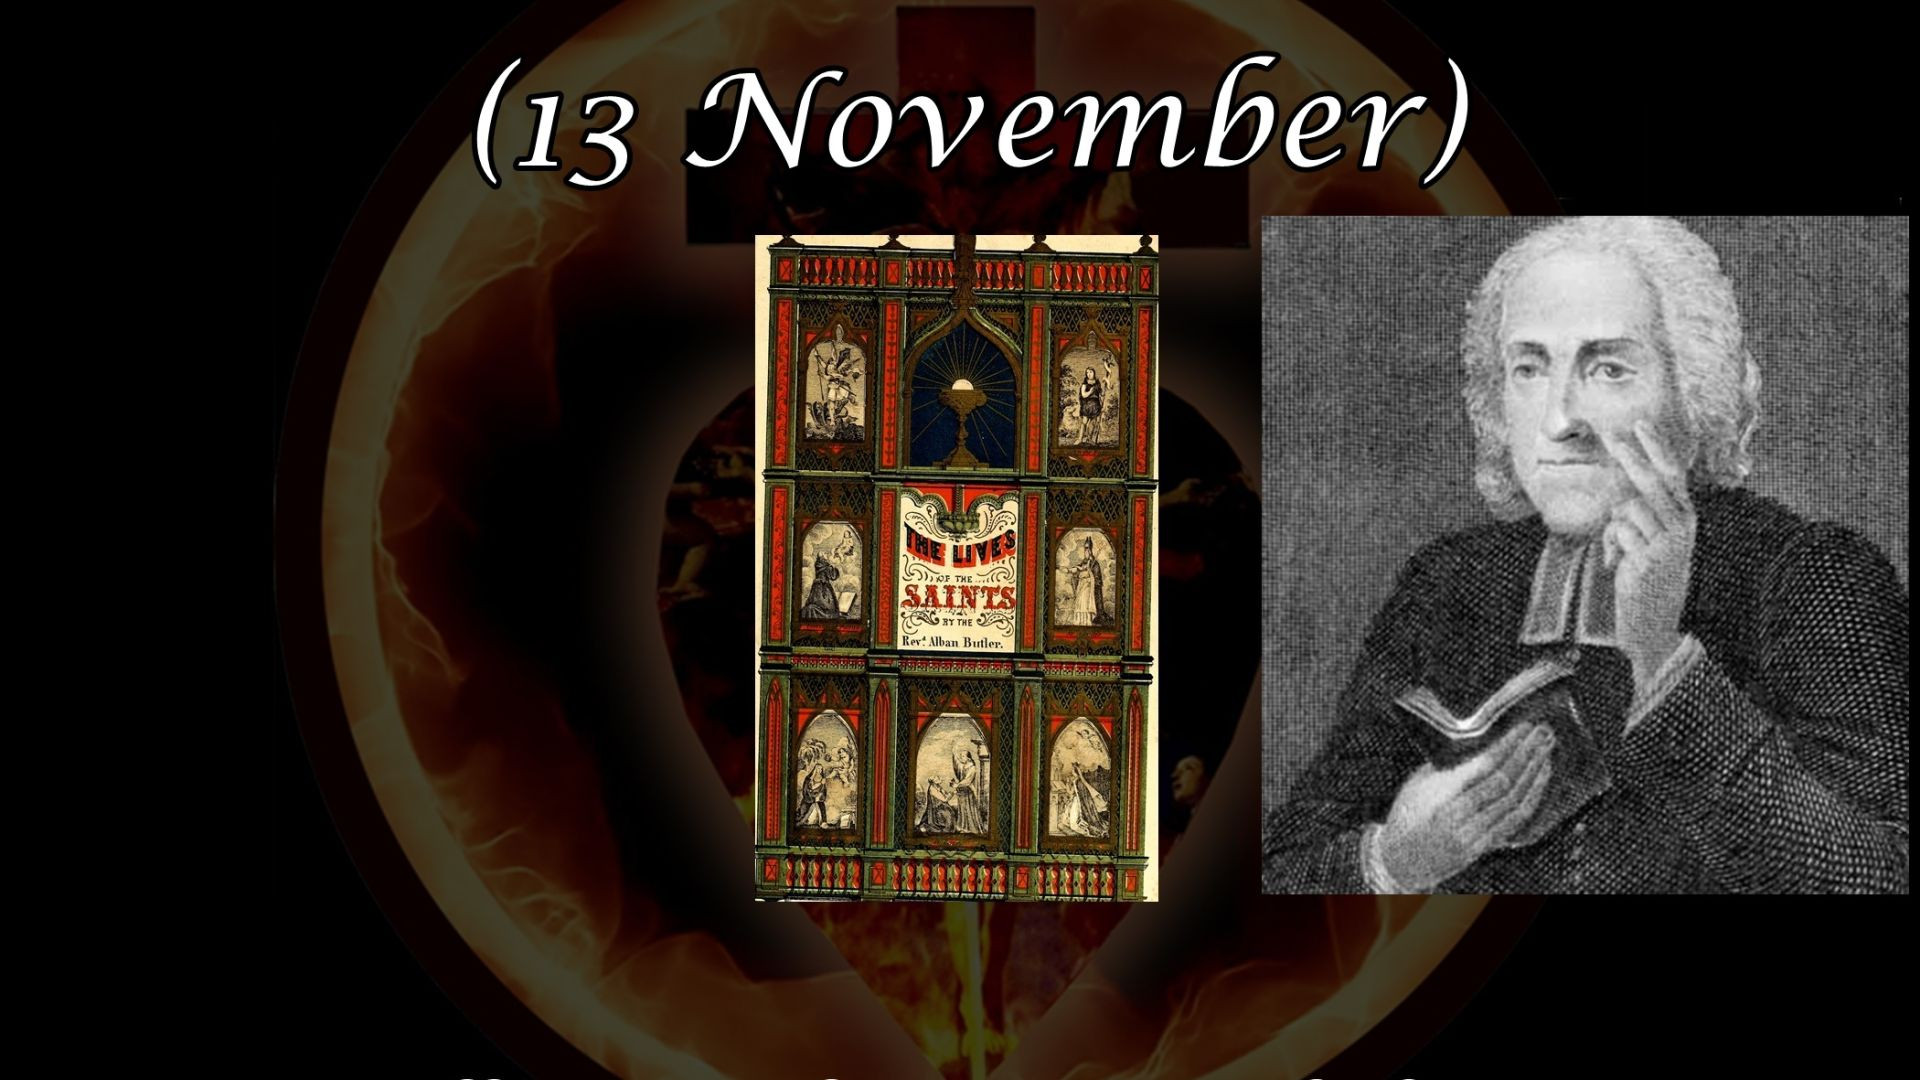 St. Constant (13 November): Butler's Lives of the Saints